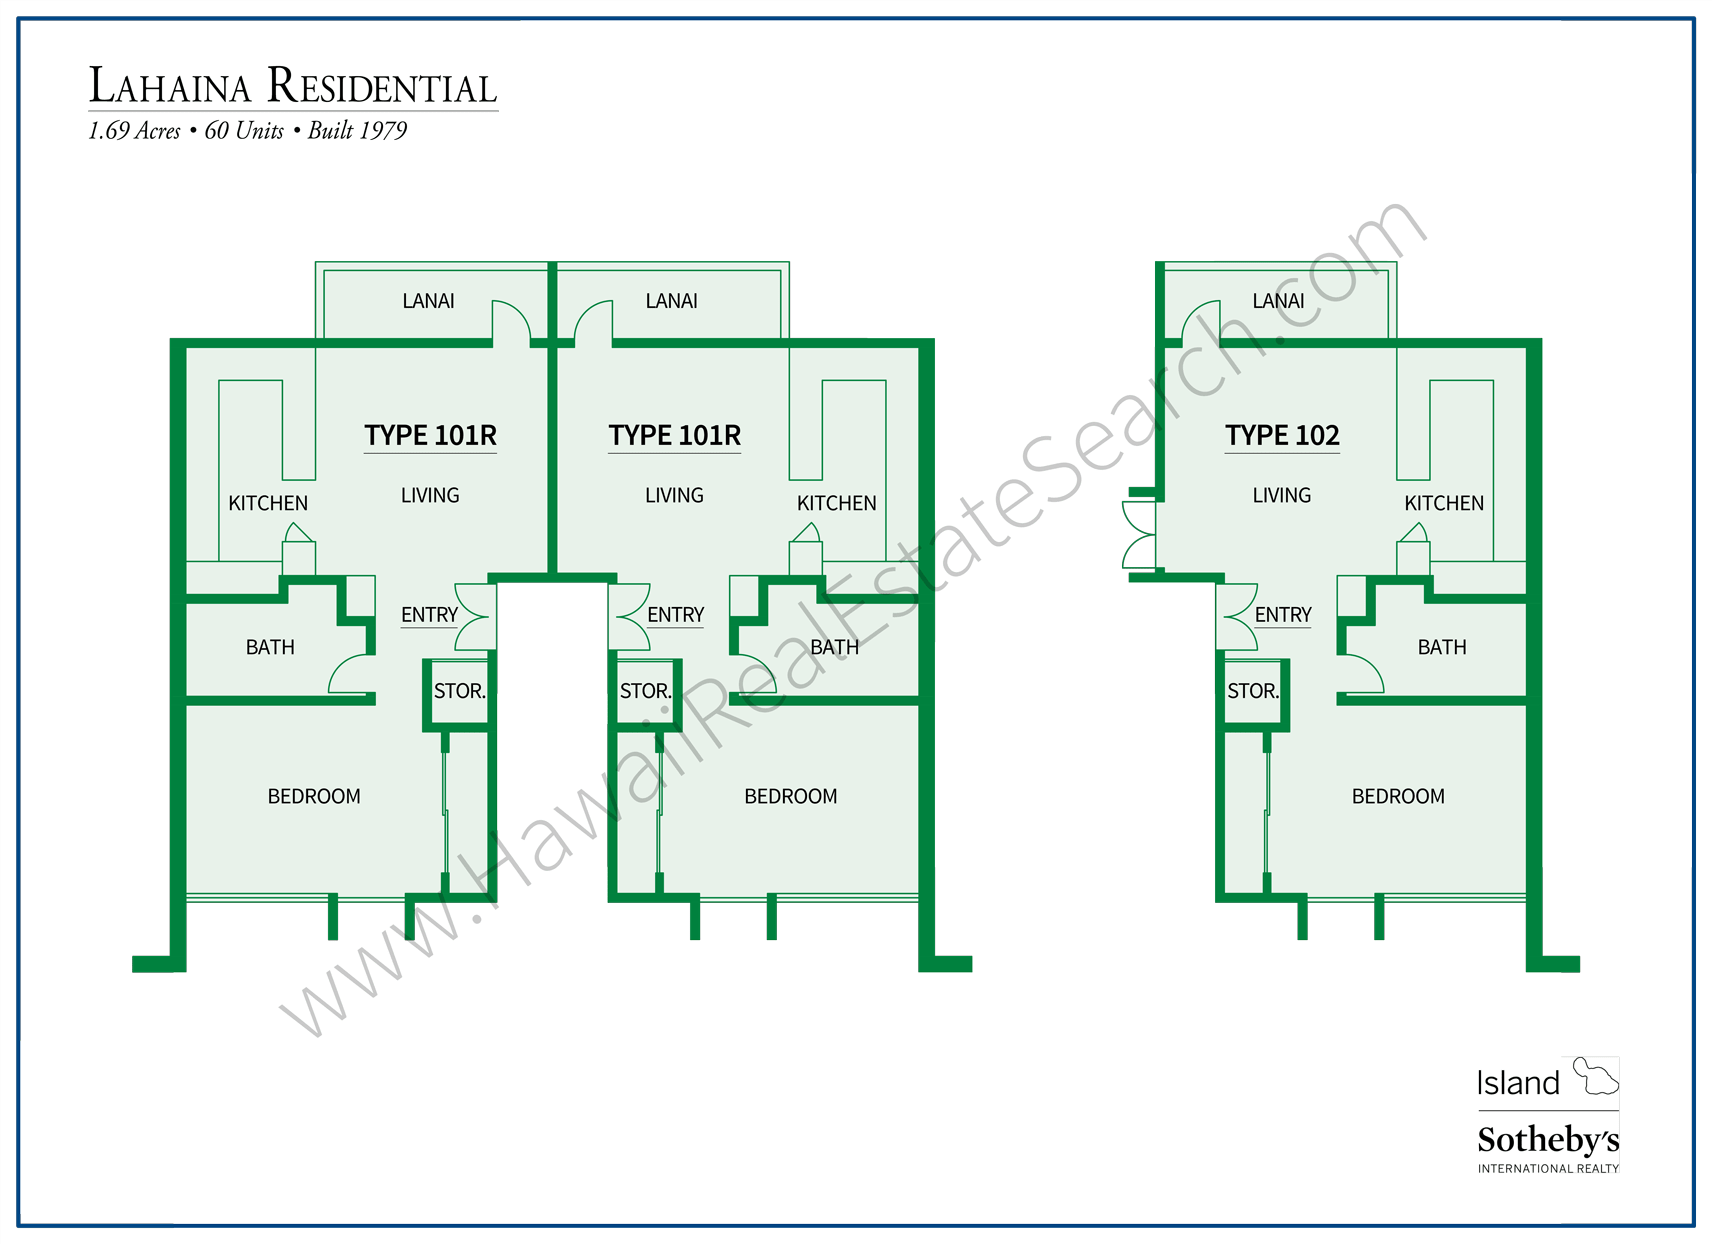 Lahaina Residential Floor Plans